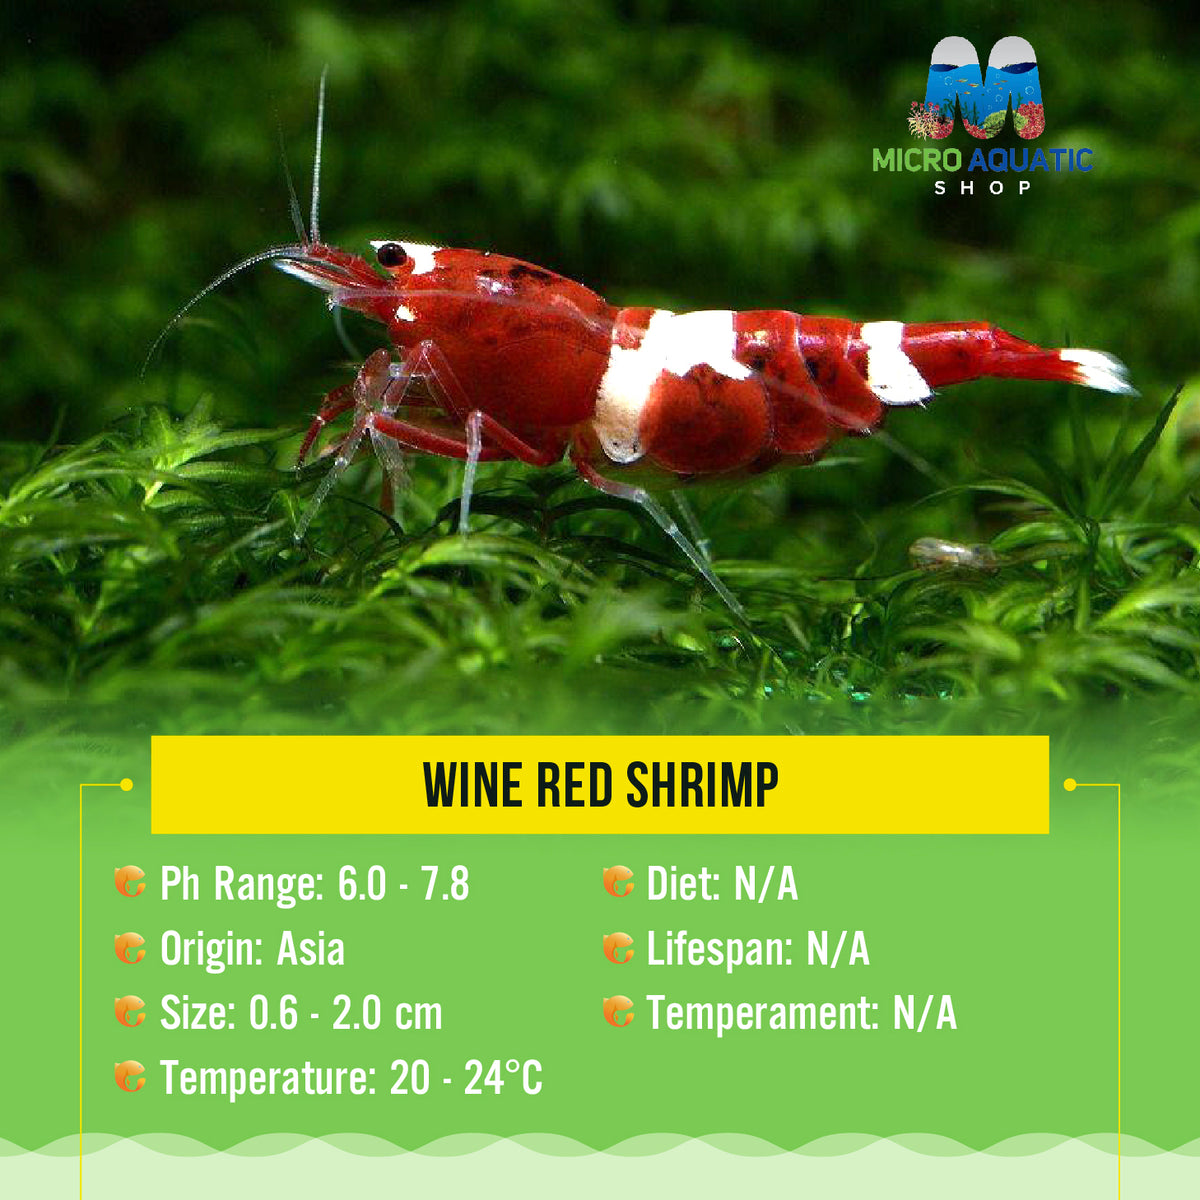 Buy 5 get 2 Wine Red Shrimp